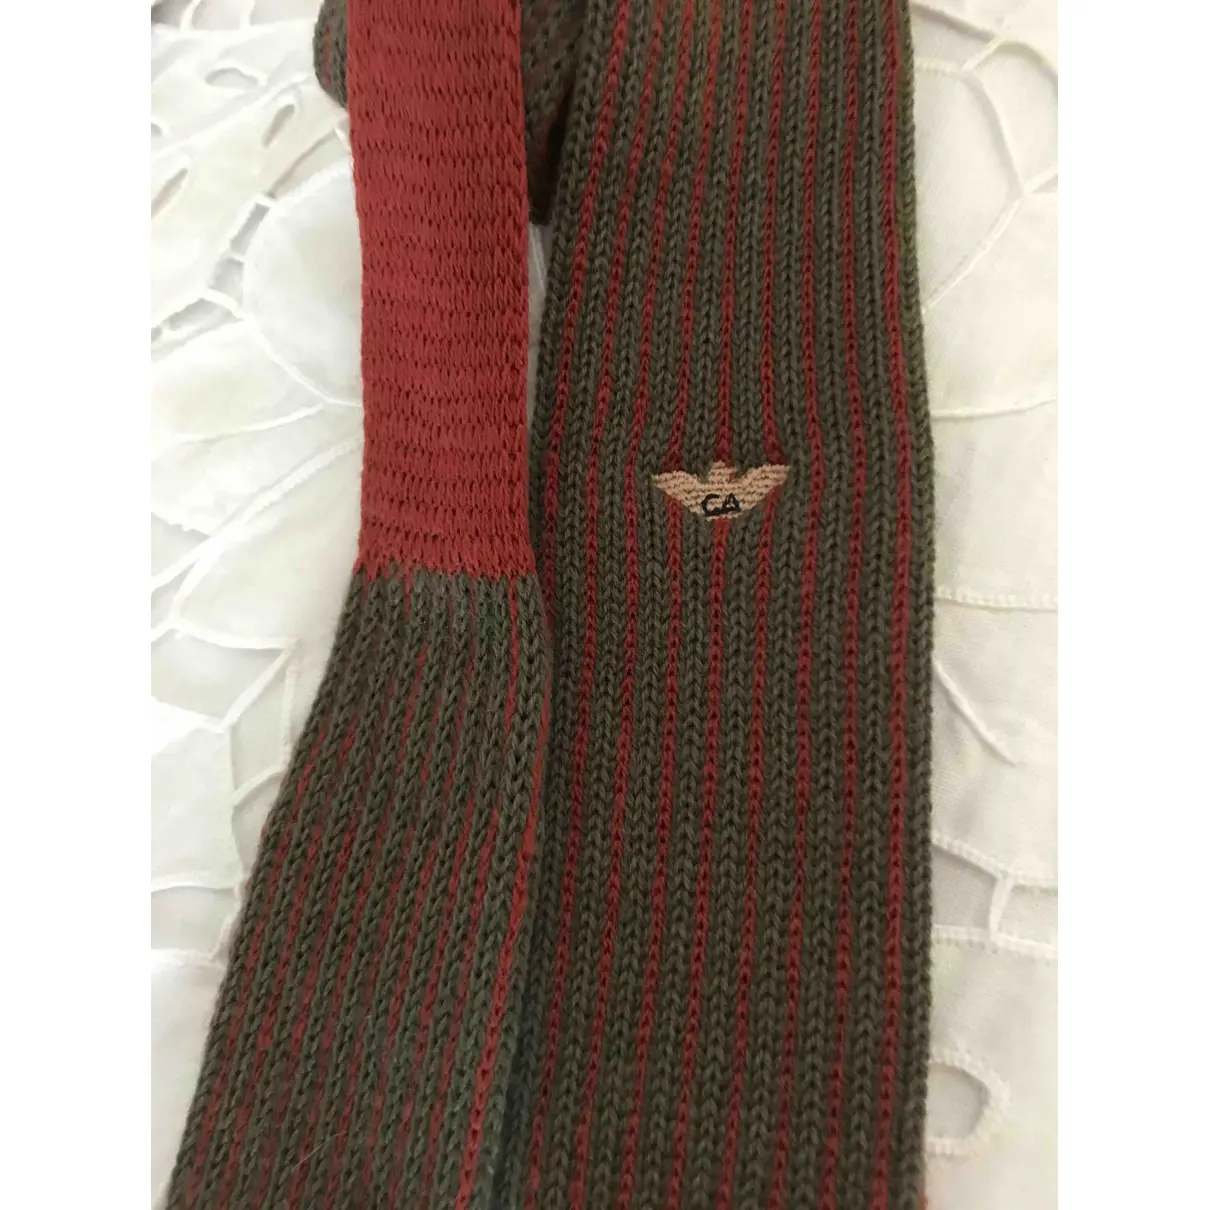 Wool tie Giorgio Armani